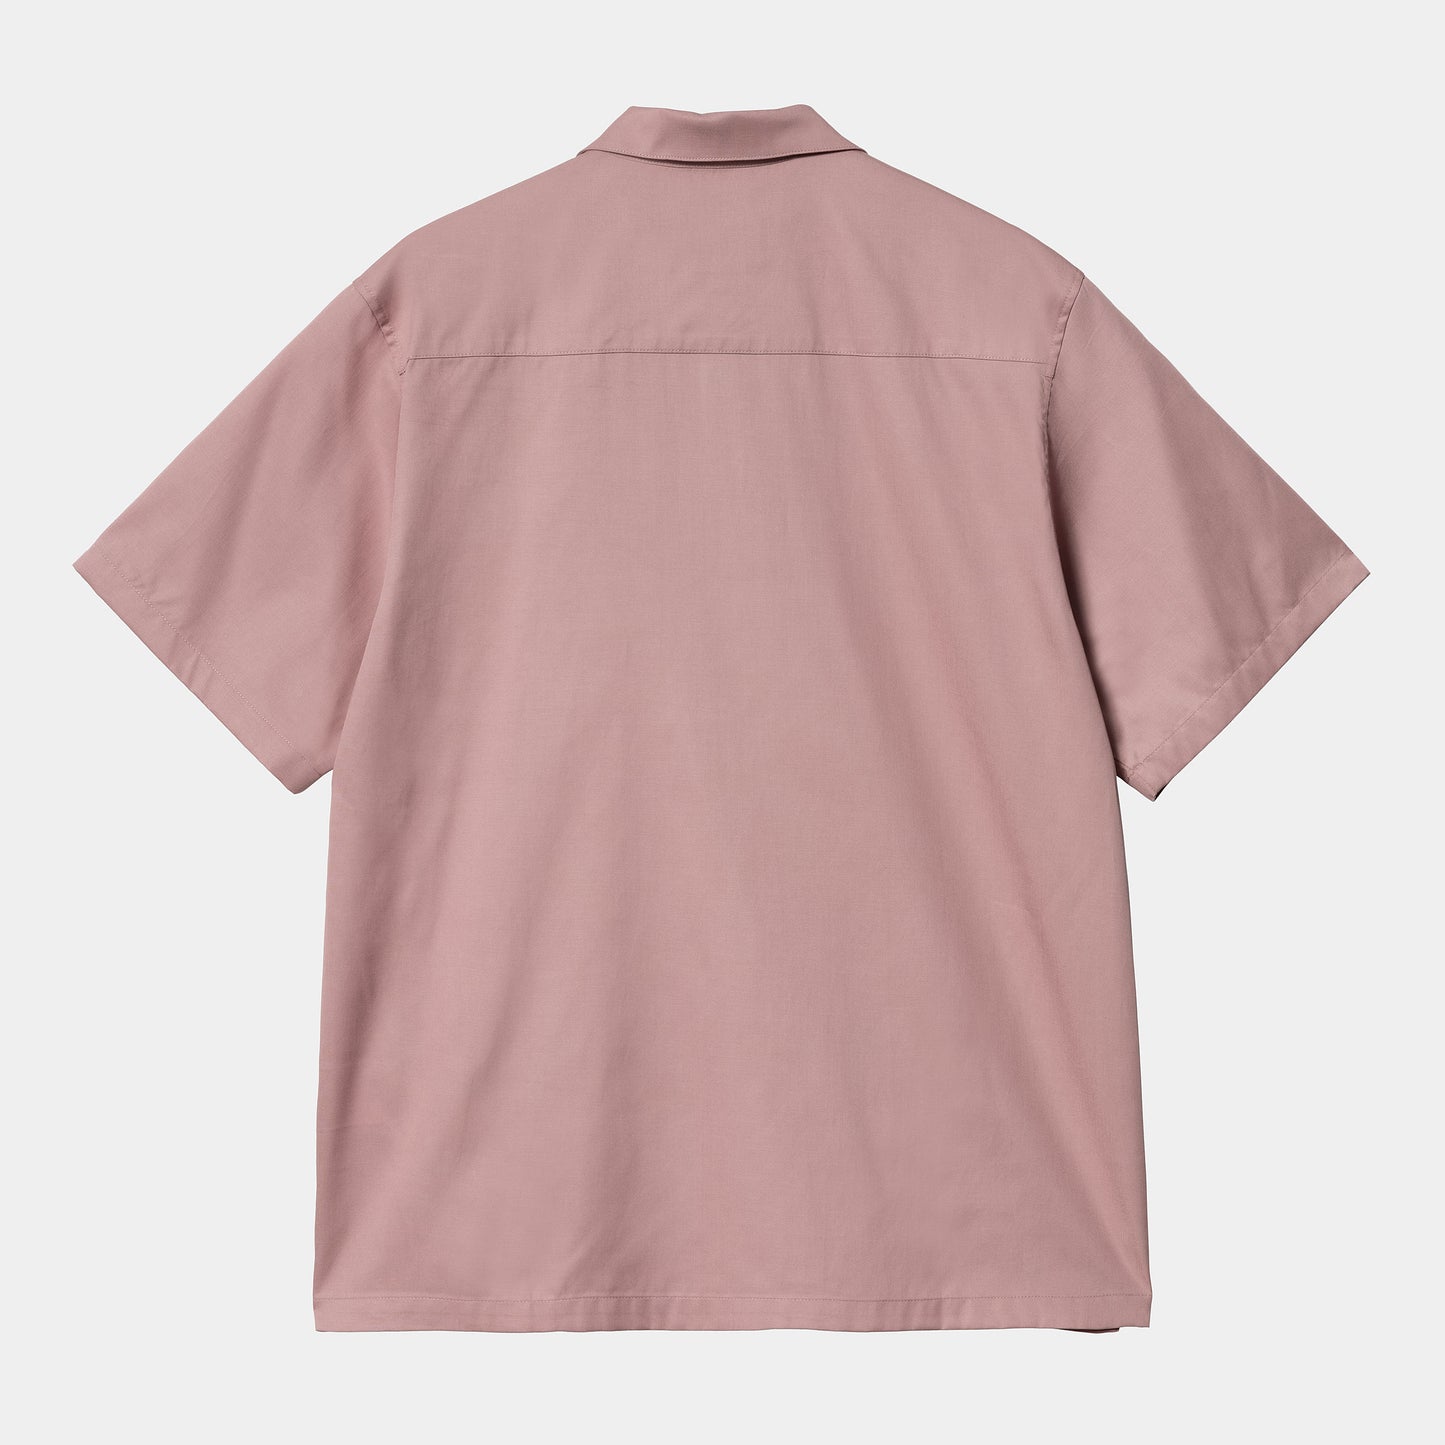 Carhartt WIP Delray Shirt Glassy Pink/Black